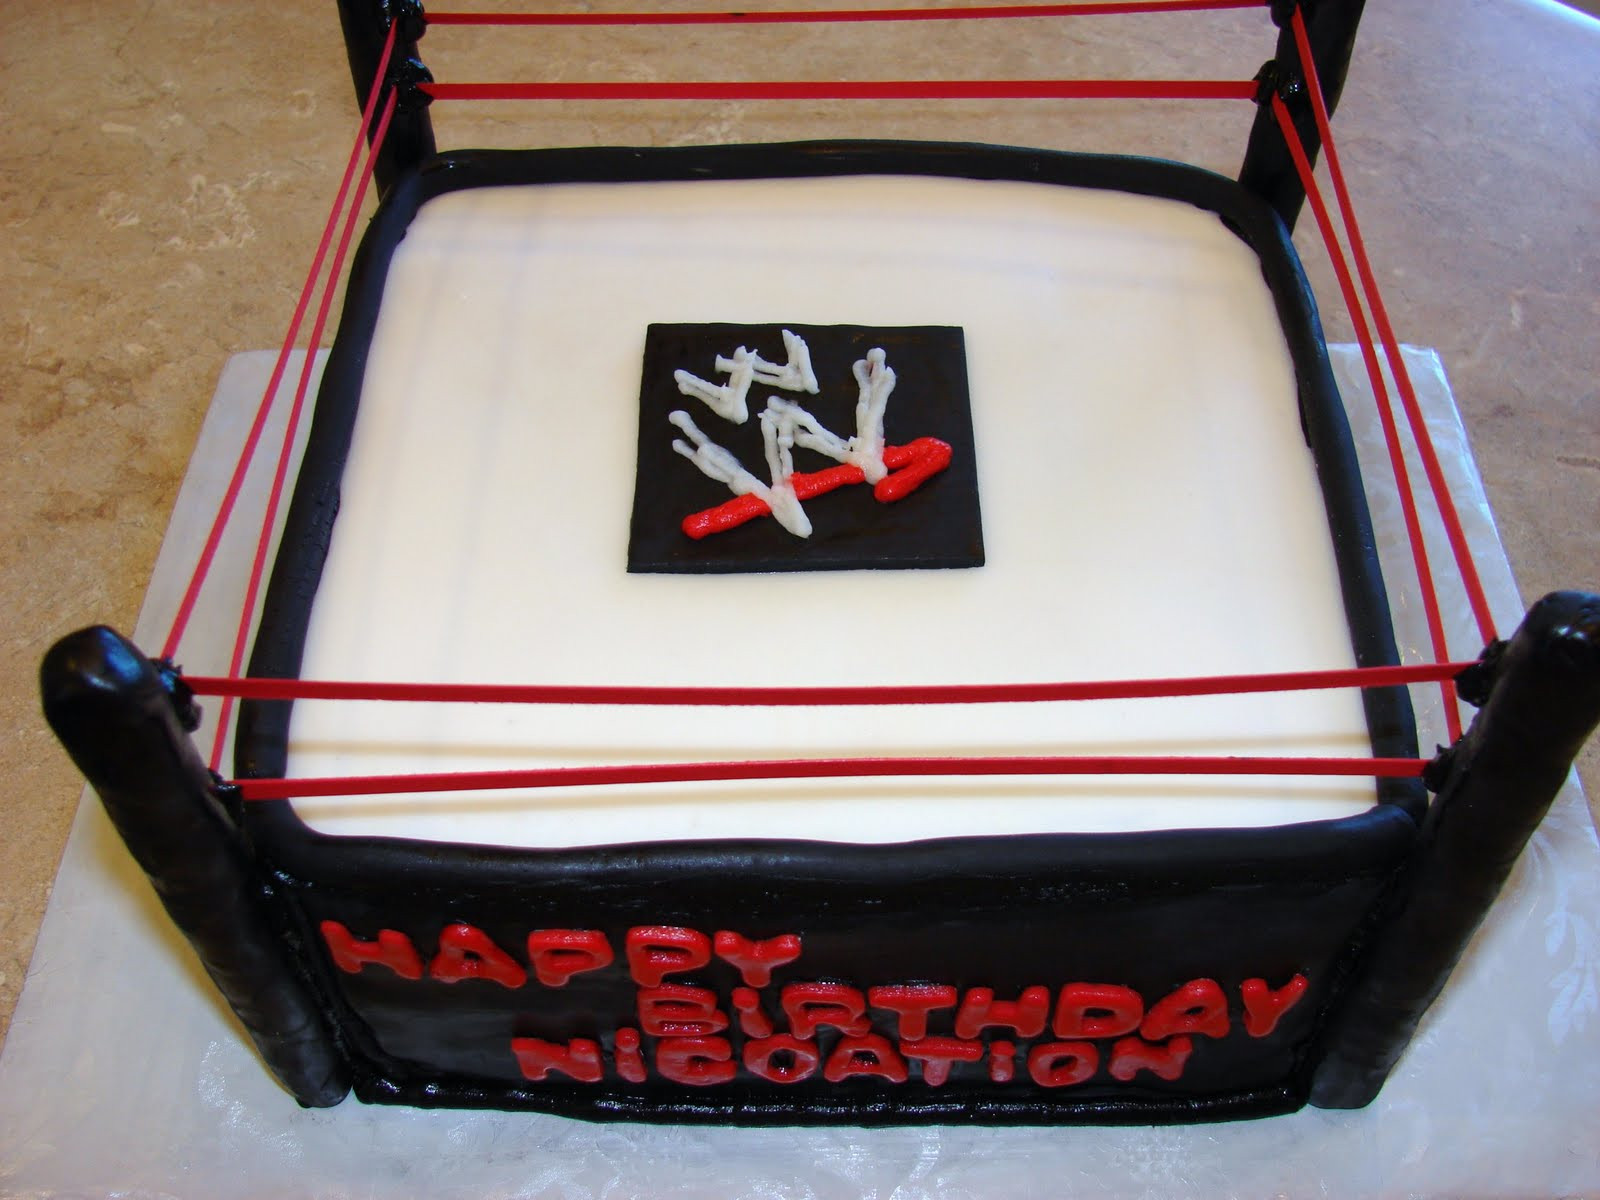 Wwe Birthday Cakes
 Ipsy Bipsy Bake Shop WWE Cake